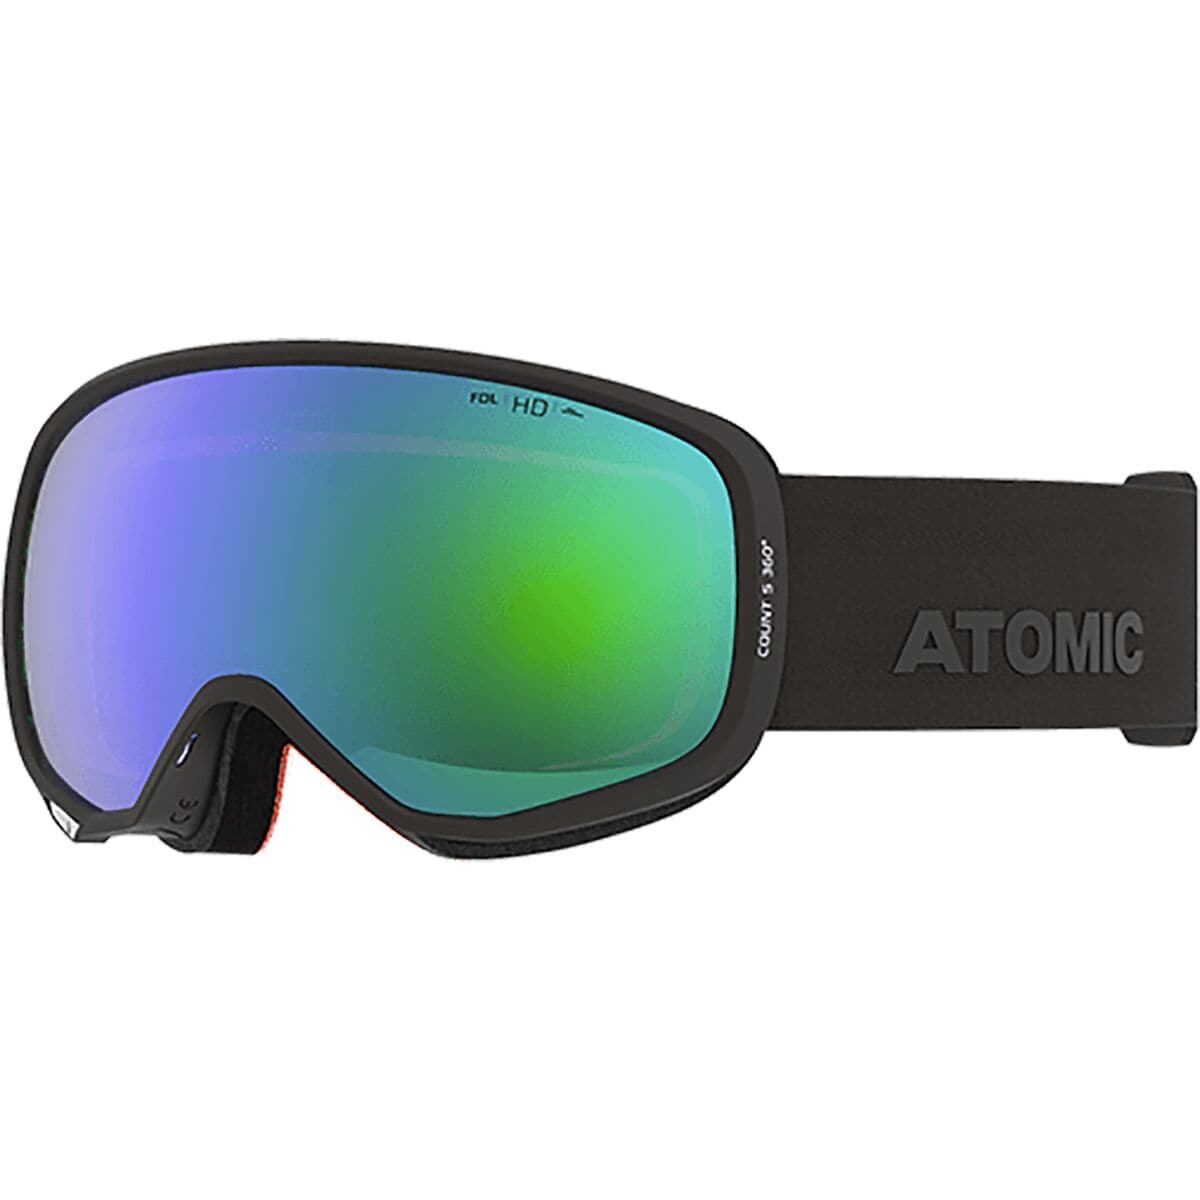 Atomic S 360 HD Goggles - Ski